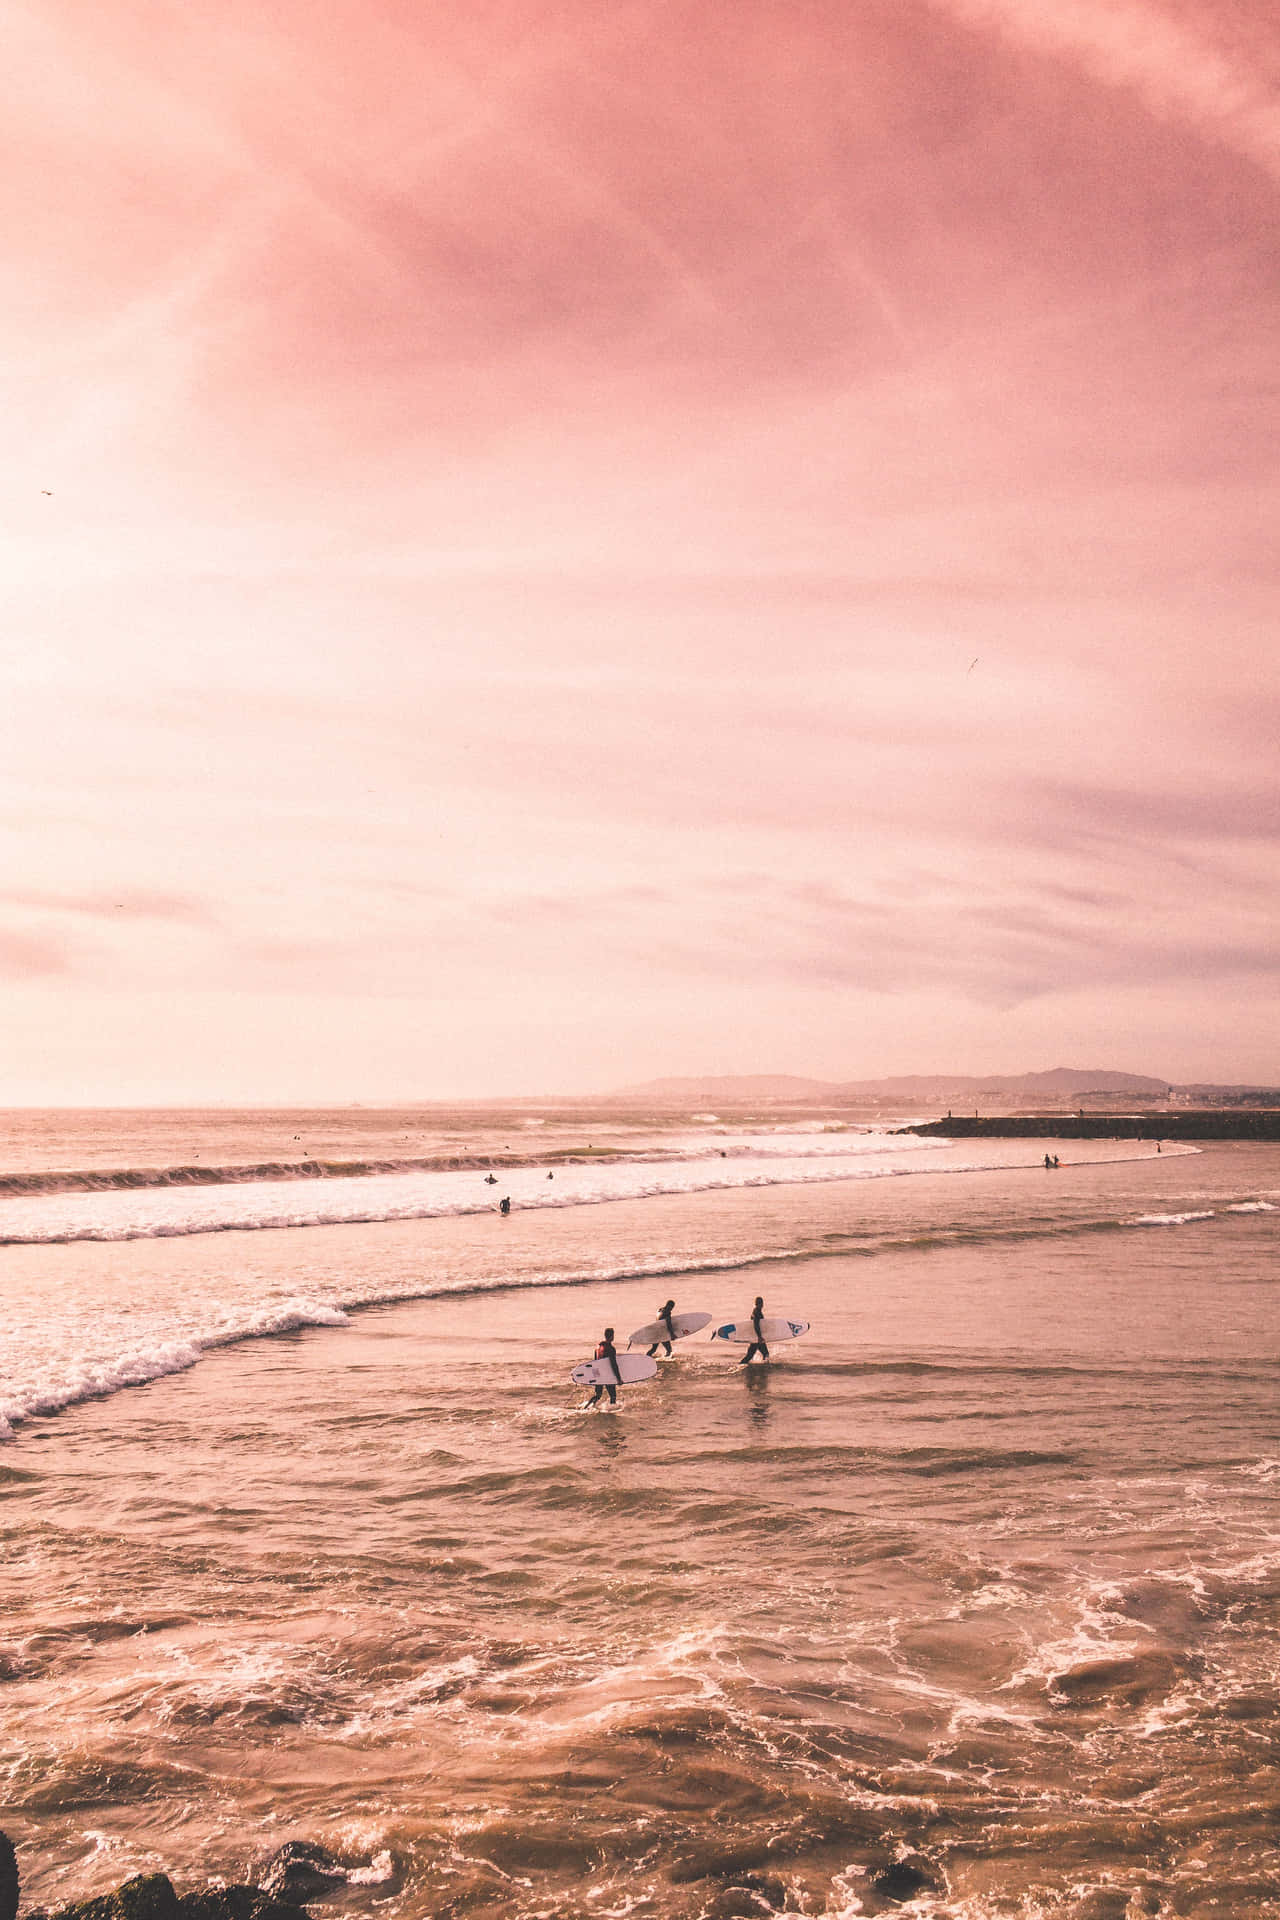  Surfen Hintergrundbild 1280x1920. Download A Group Of People Are Surfing On The Ocean Wallpaper